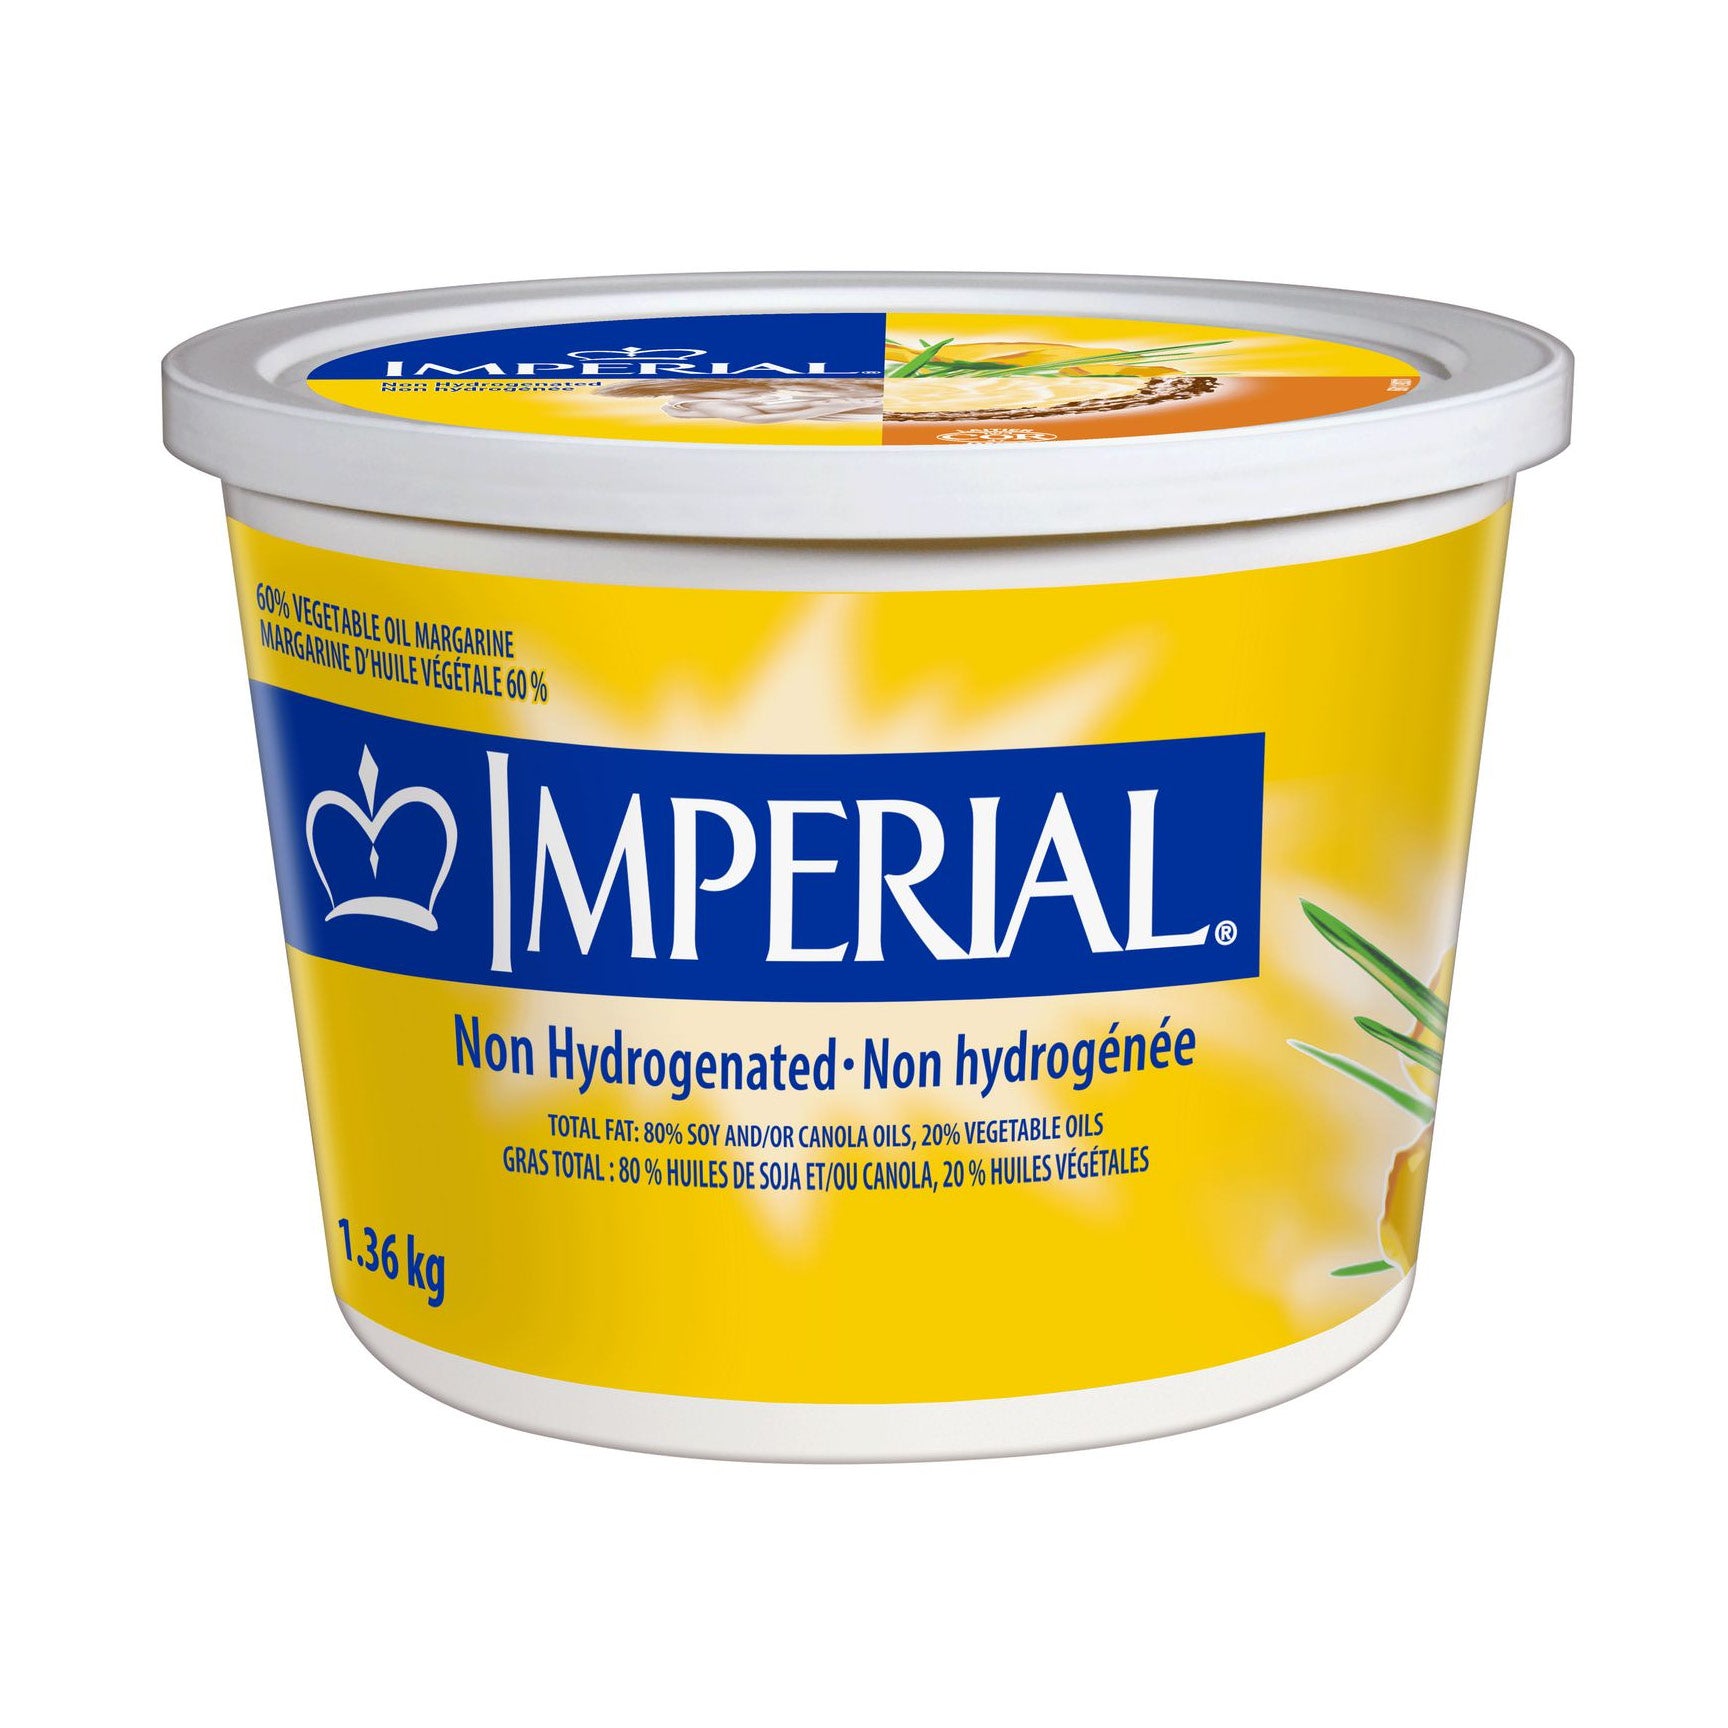 Becel Margarine Tub, 1.22kg